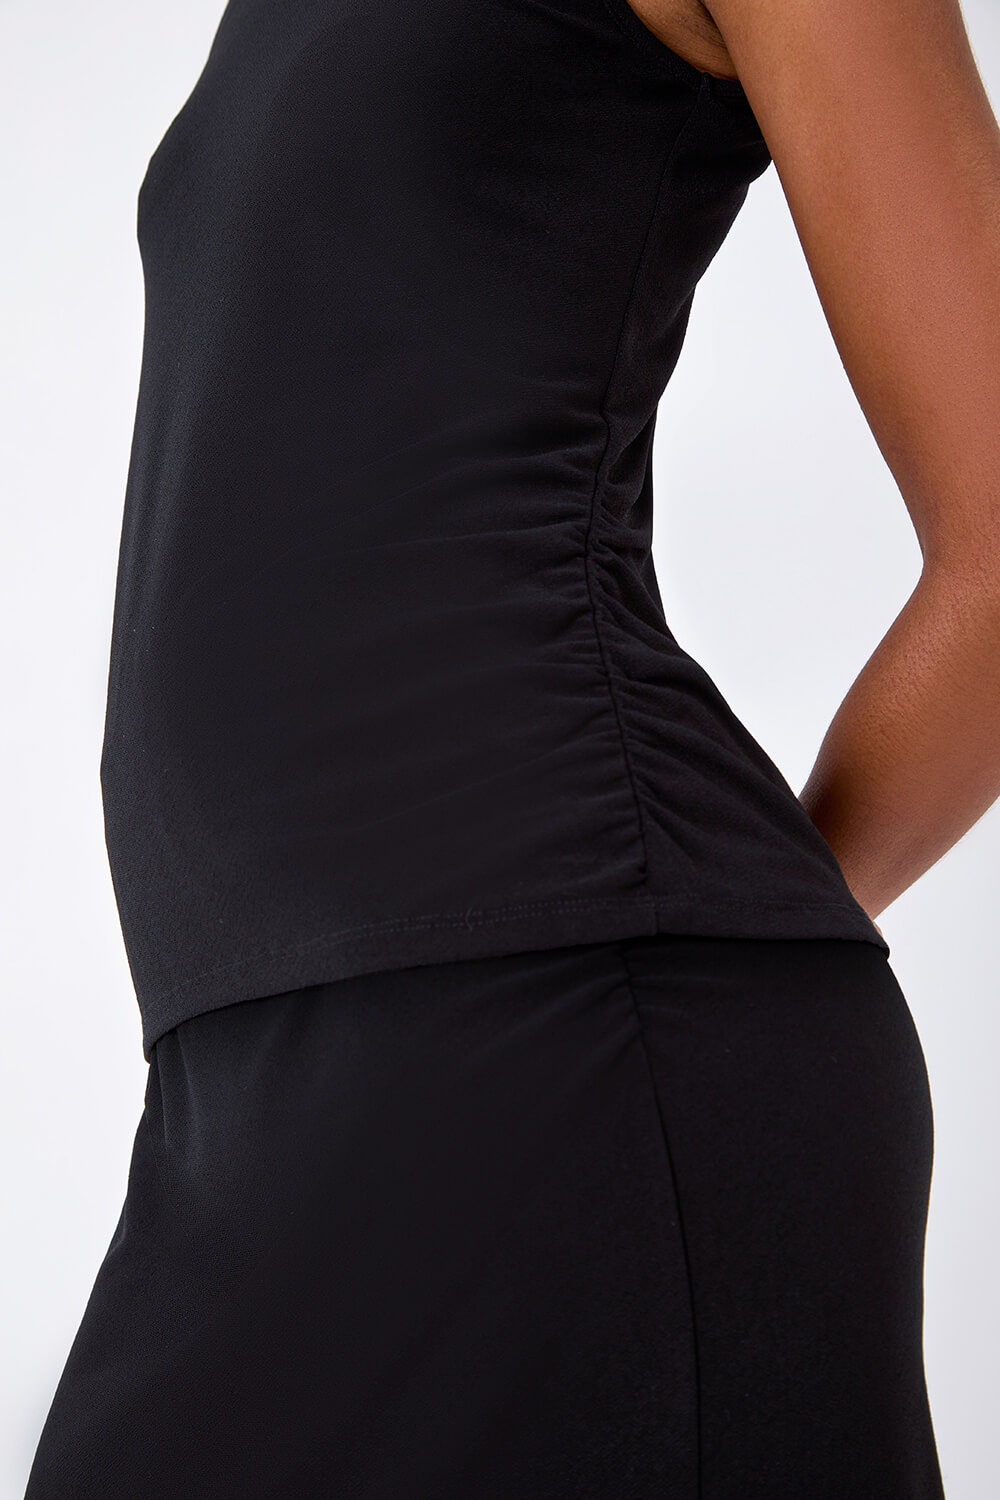 Black Ruched Detail Stretch Vest Top, Image 5 of 5